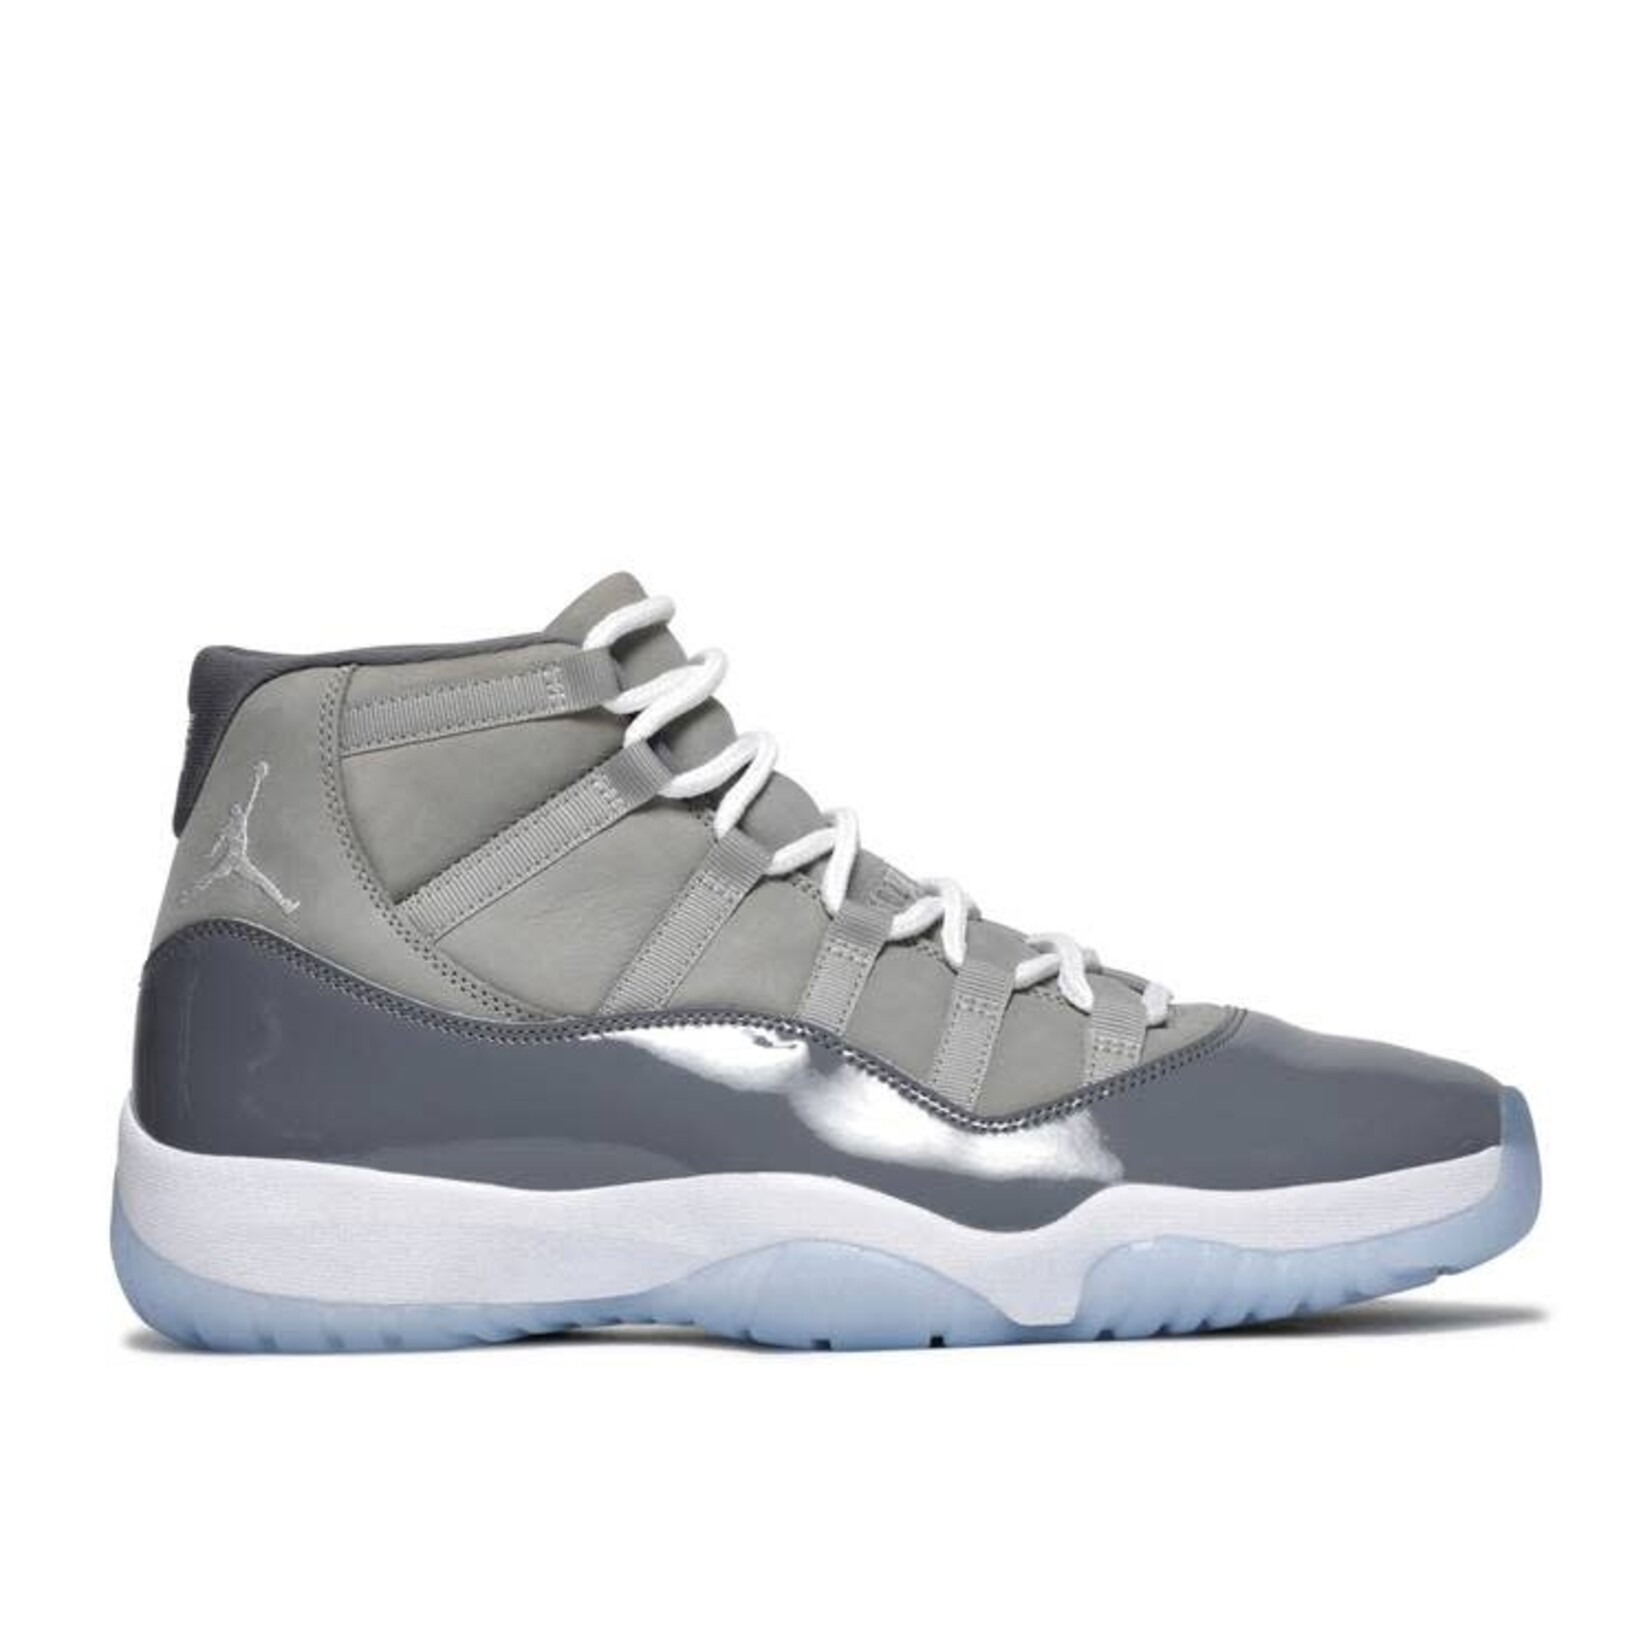 Jordan Jordan 11 Retro Cool Grey (2021) Size 11, DS BRAND NEW